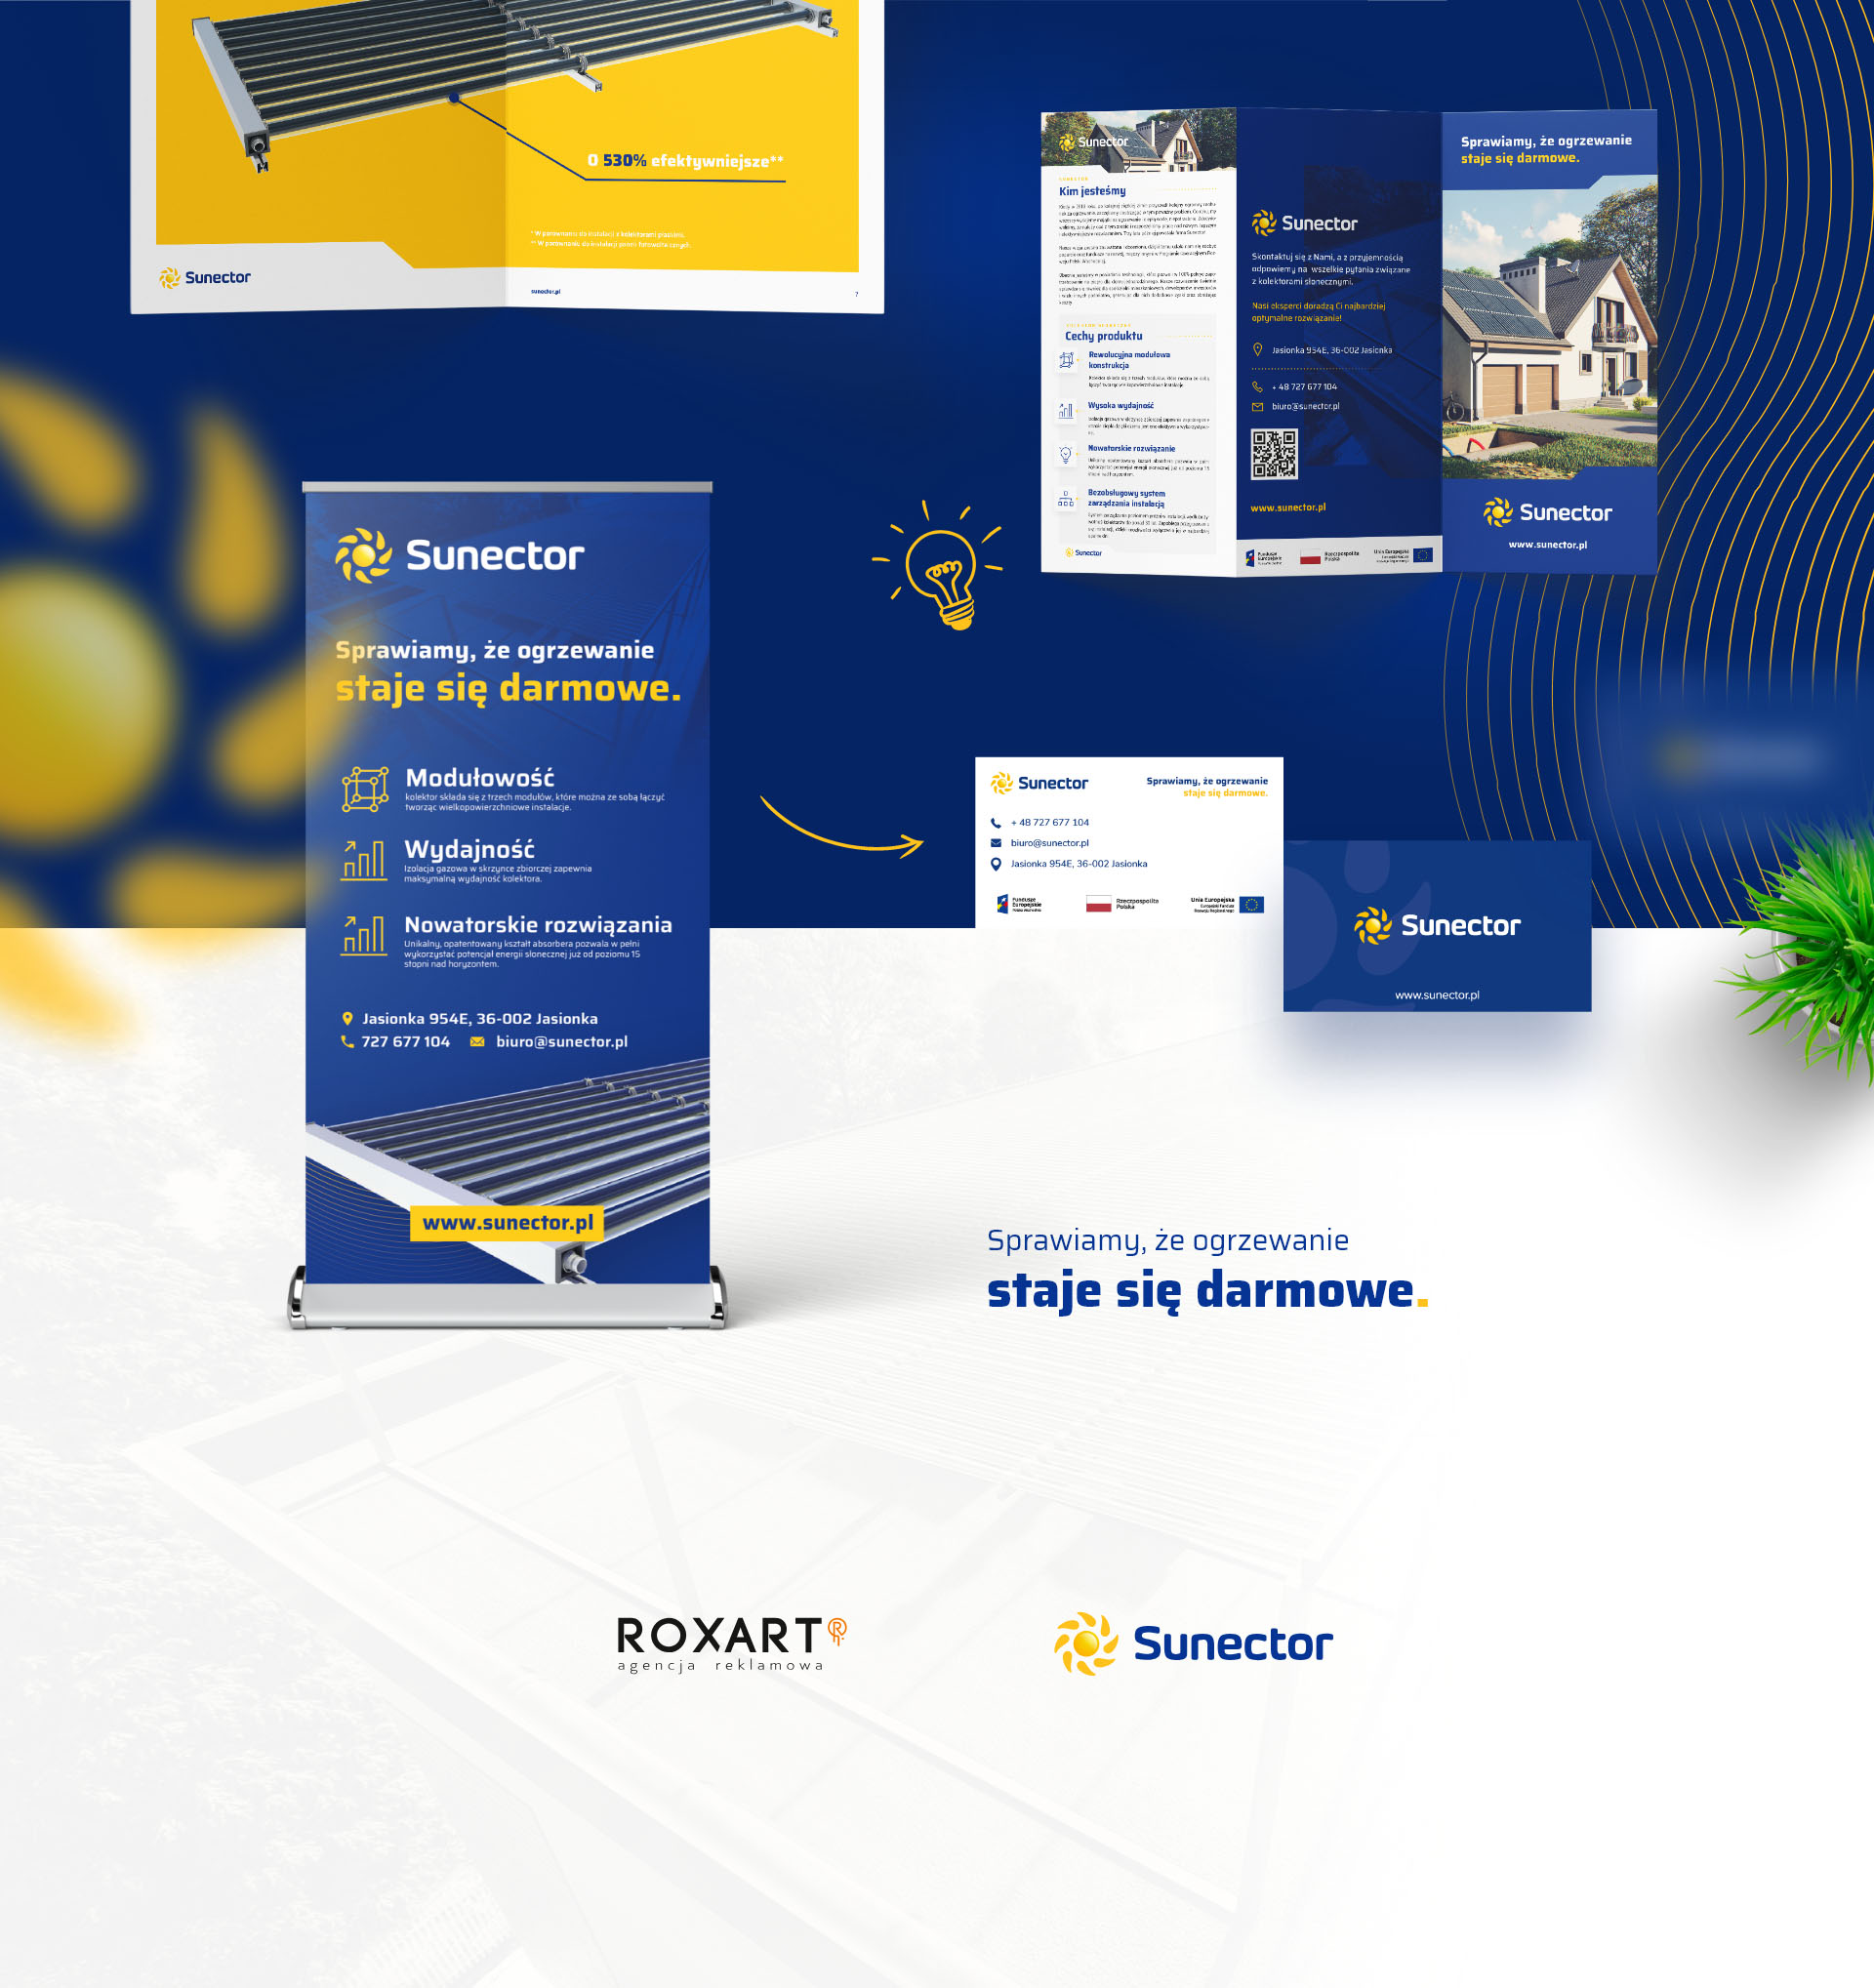 Sunector - Realizacja - Agencja ROXART